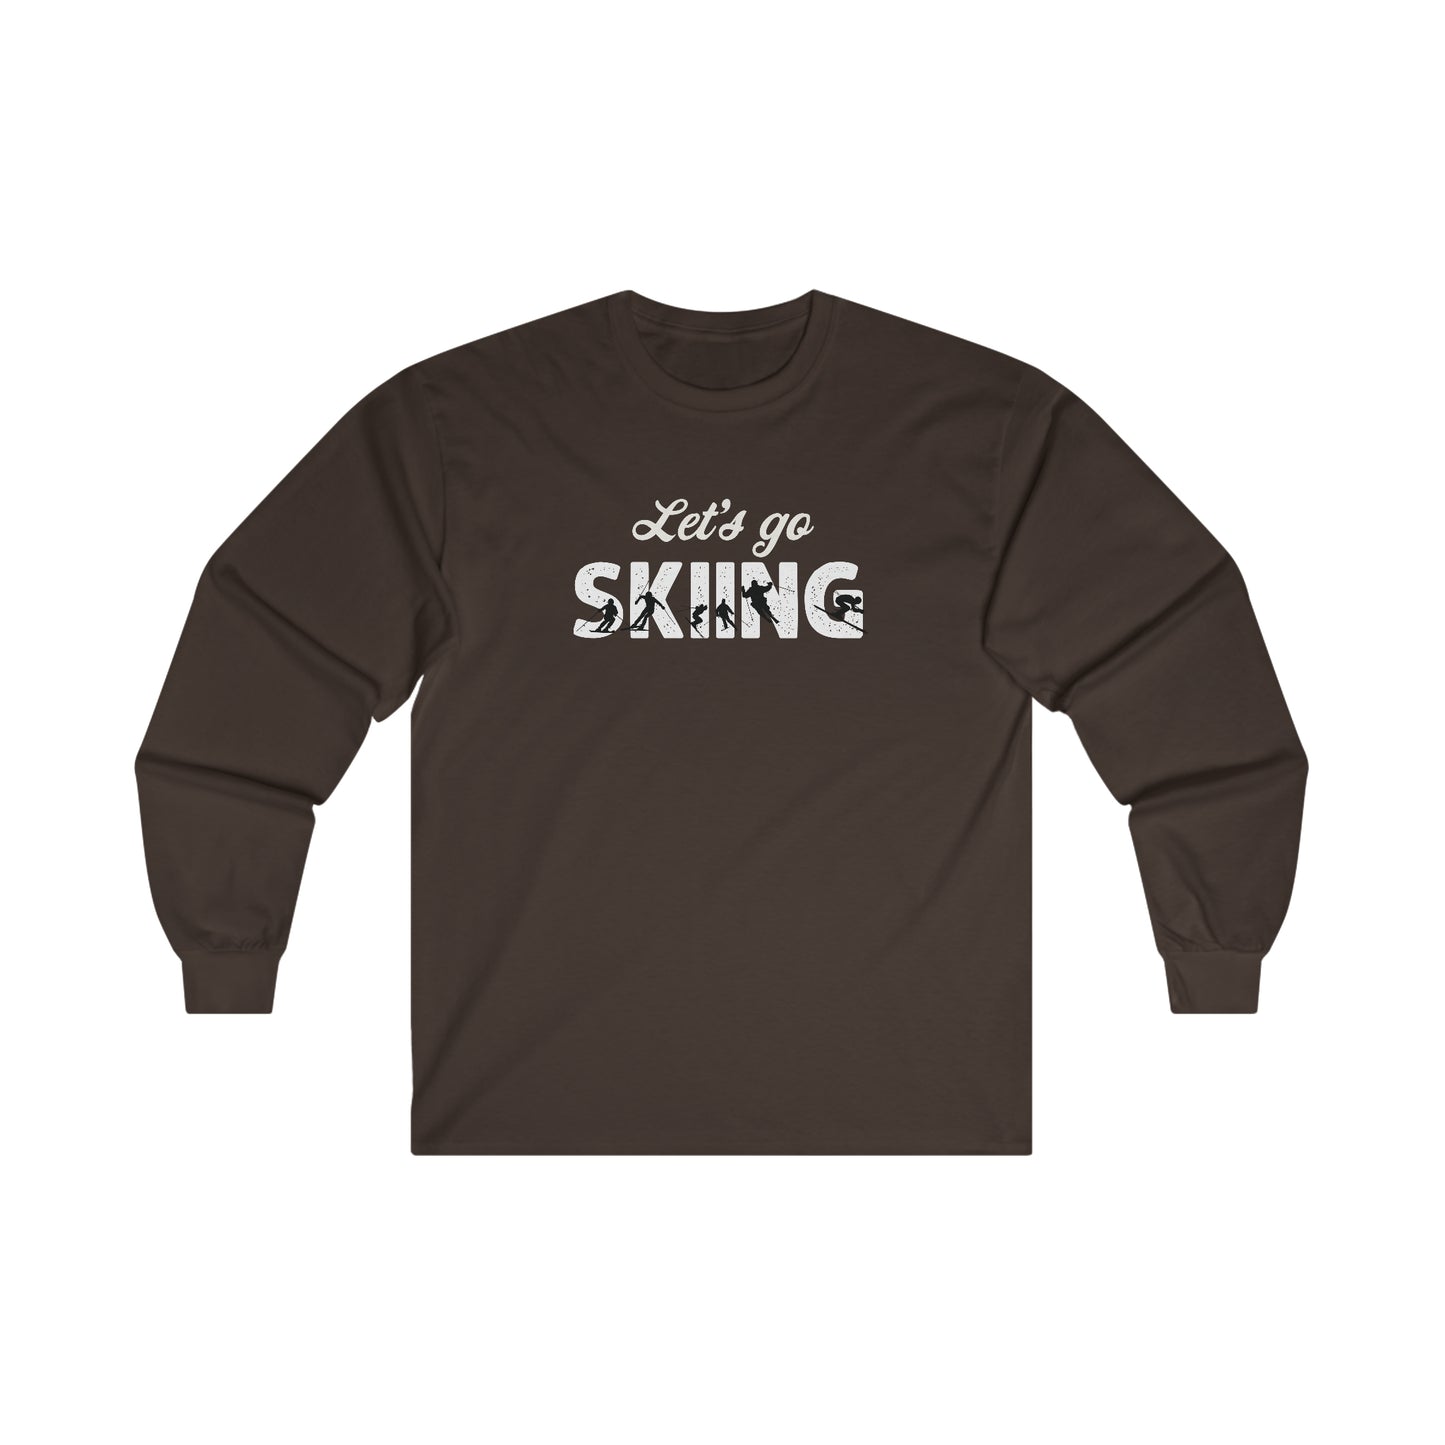 Ski T-Shirt For Skiing TShirt For Down Hill Ski Shirt For Mogul Skier T Shirt For Back Country Skiing